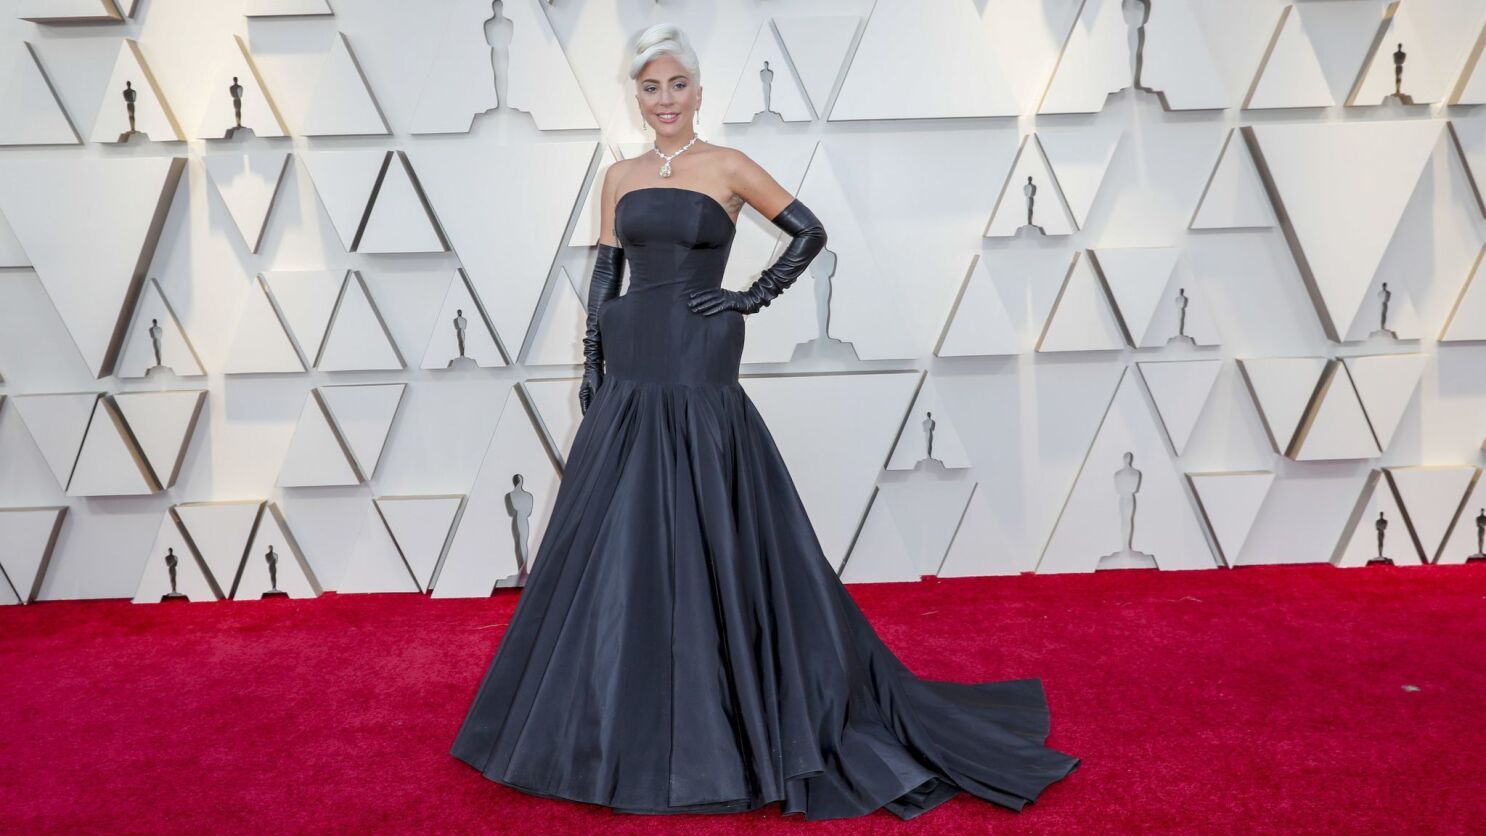 Oscars 2019: Lady Gaga won this awards season's fashion gold Los Angeles